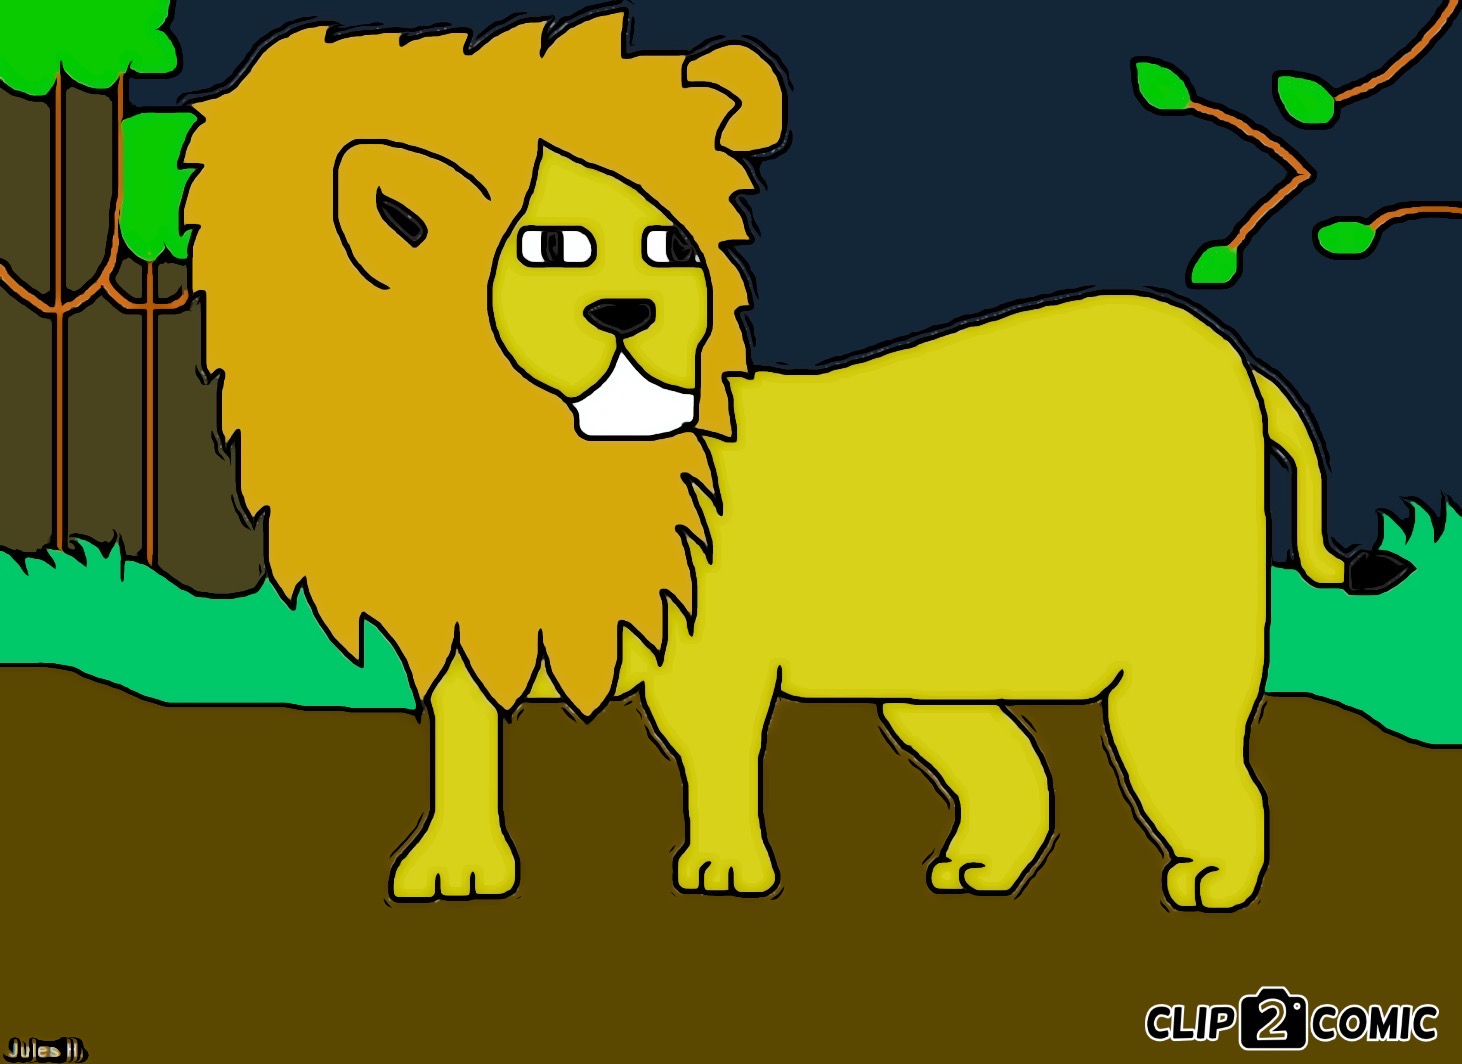 Clip 2 Comic Cartoon Lion 2. by Jules2005 on DeviantArt